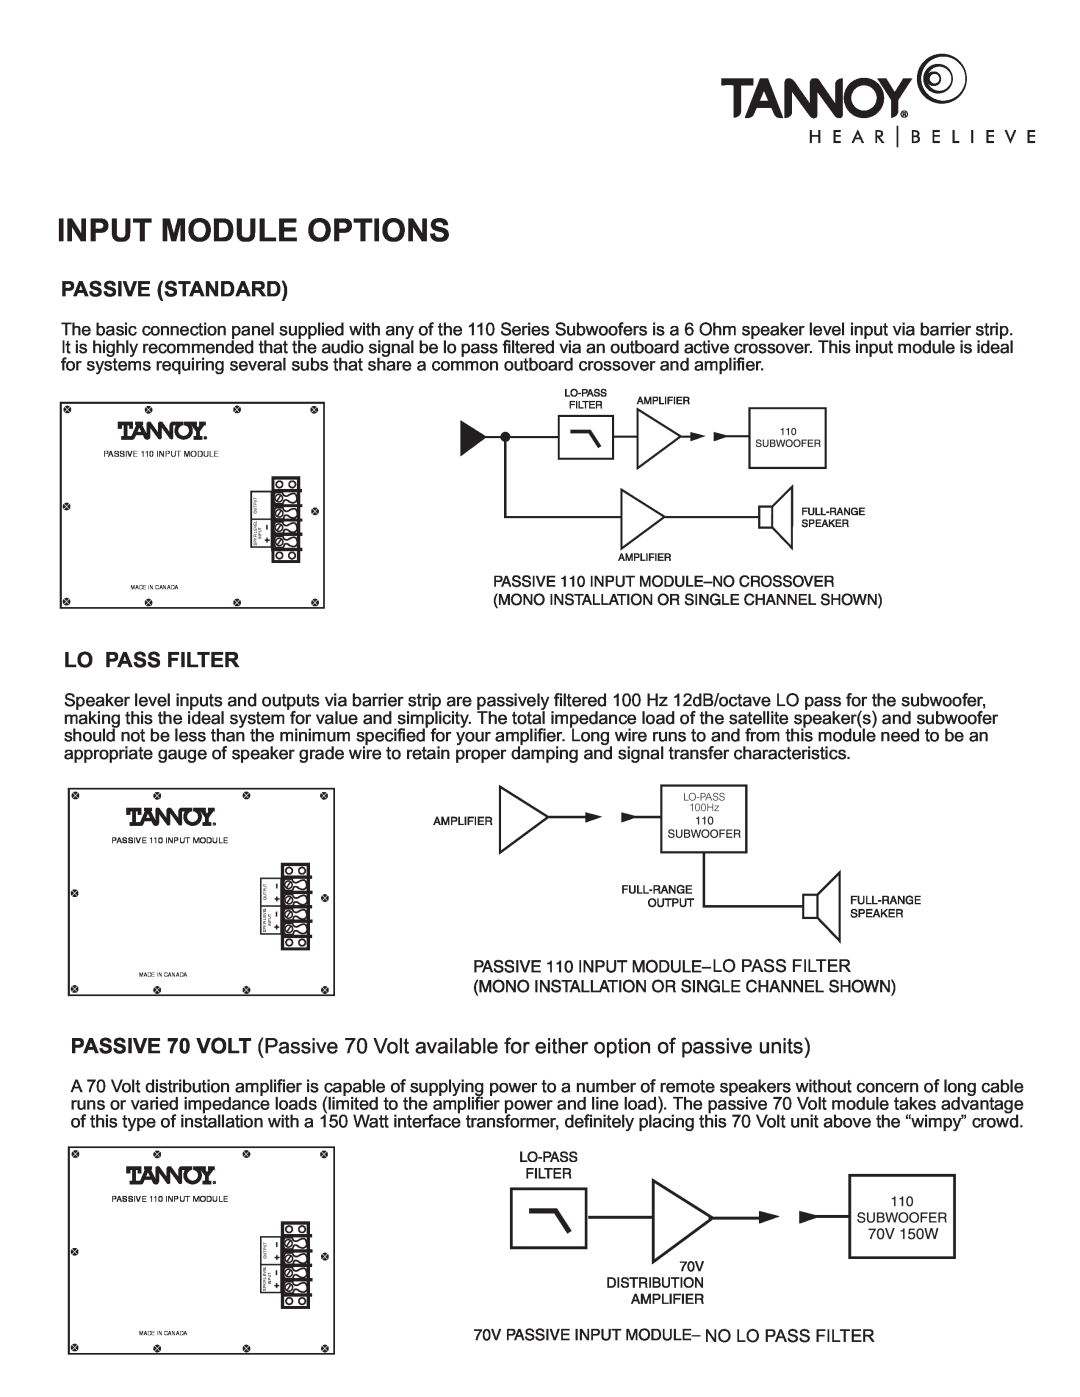 TOA Electronics 110SR owner manual Input Module Options, Passive Standard, Lo Pass Filter 